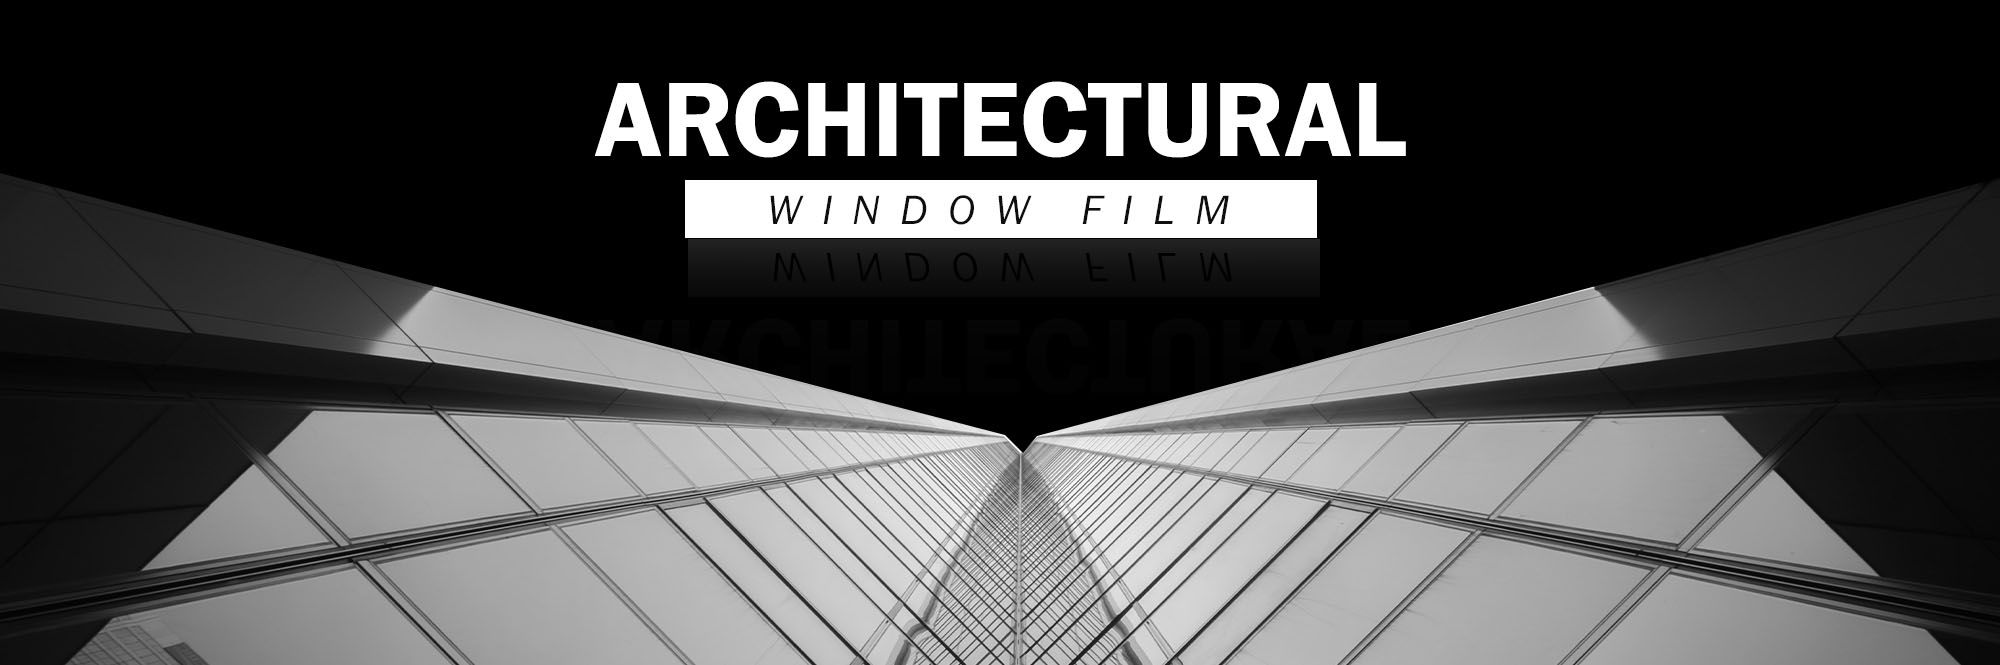 Architectural window film